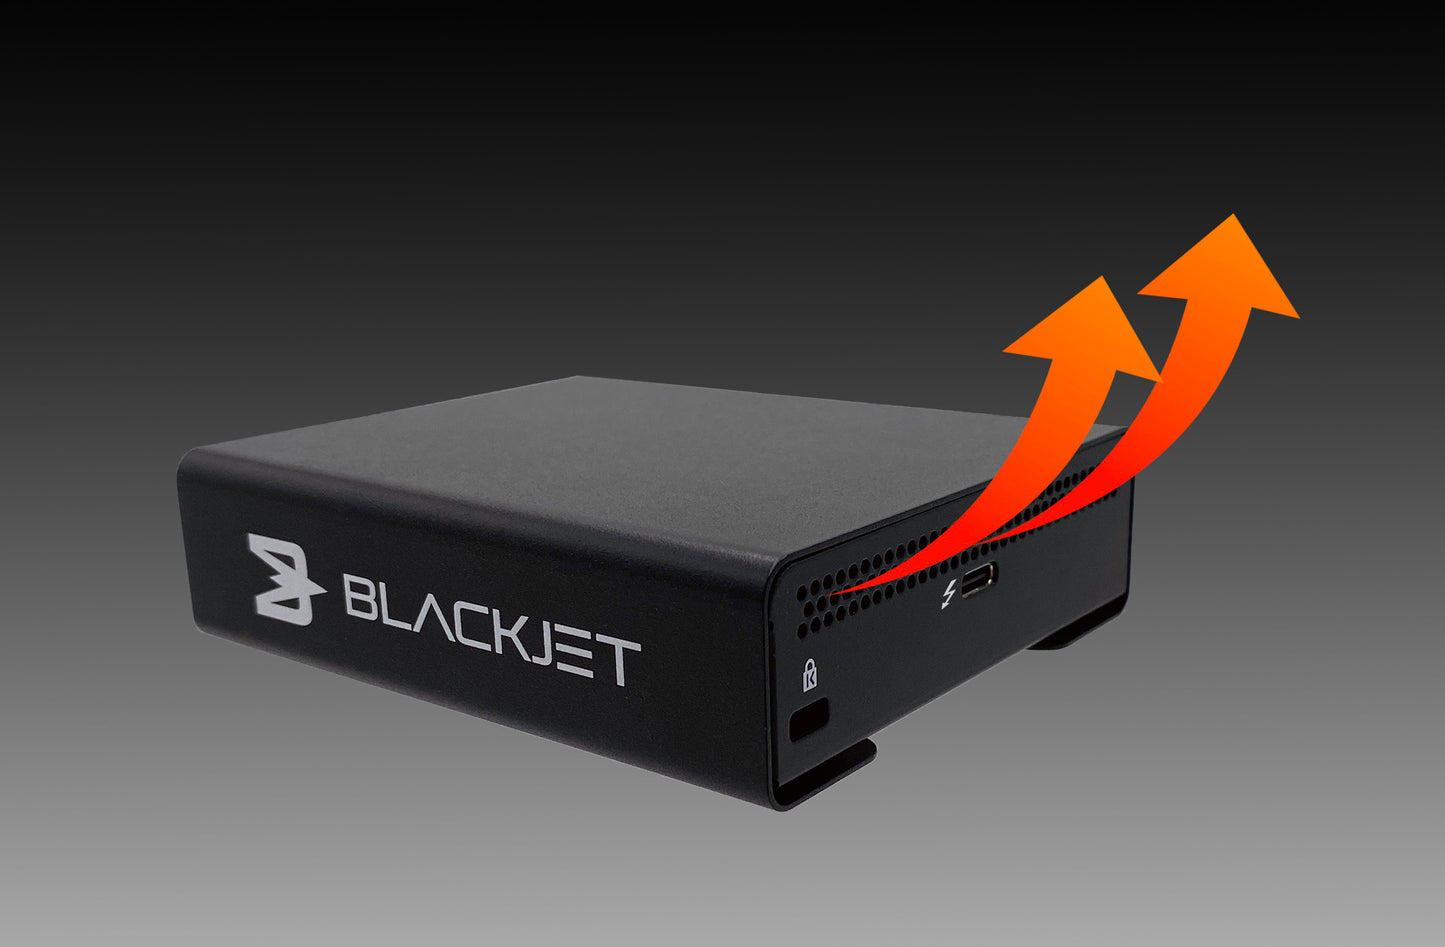 BLACKJET TX-1CXQ CFexpress B / XQD Lector Thunderbolt 3 